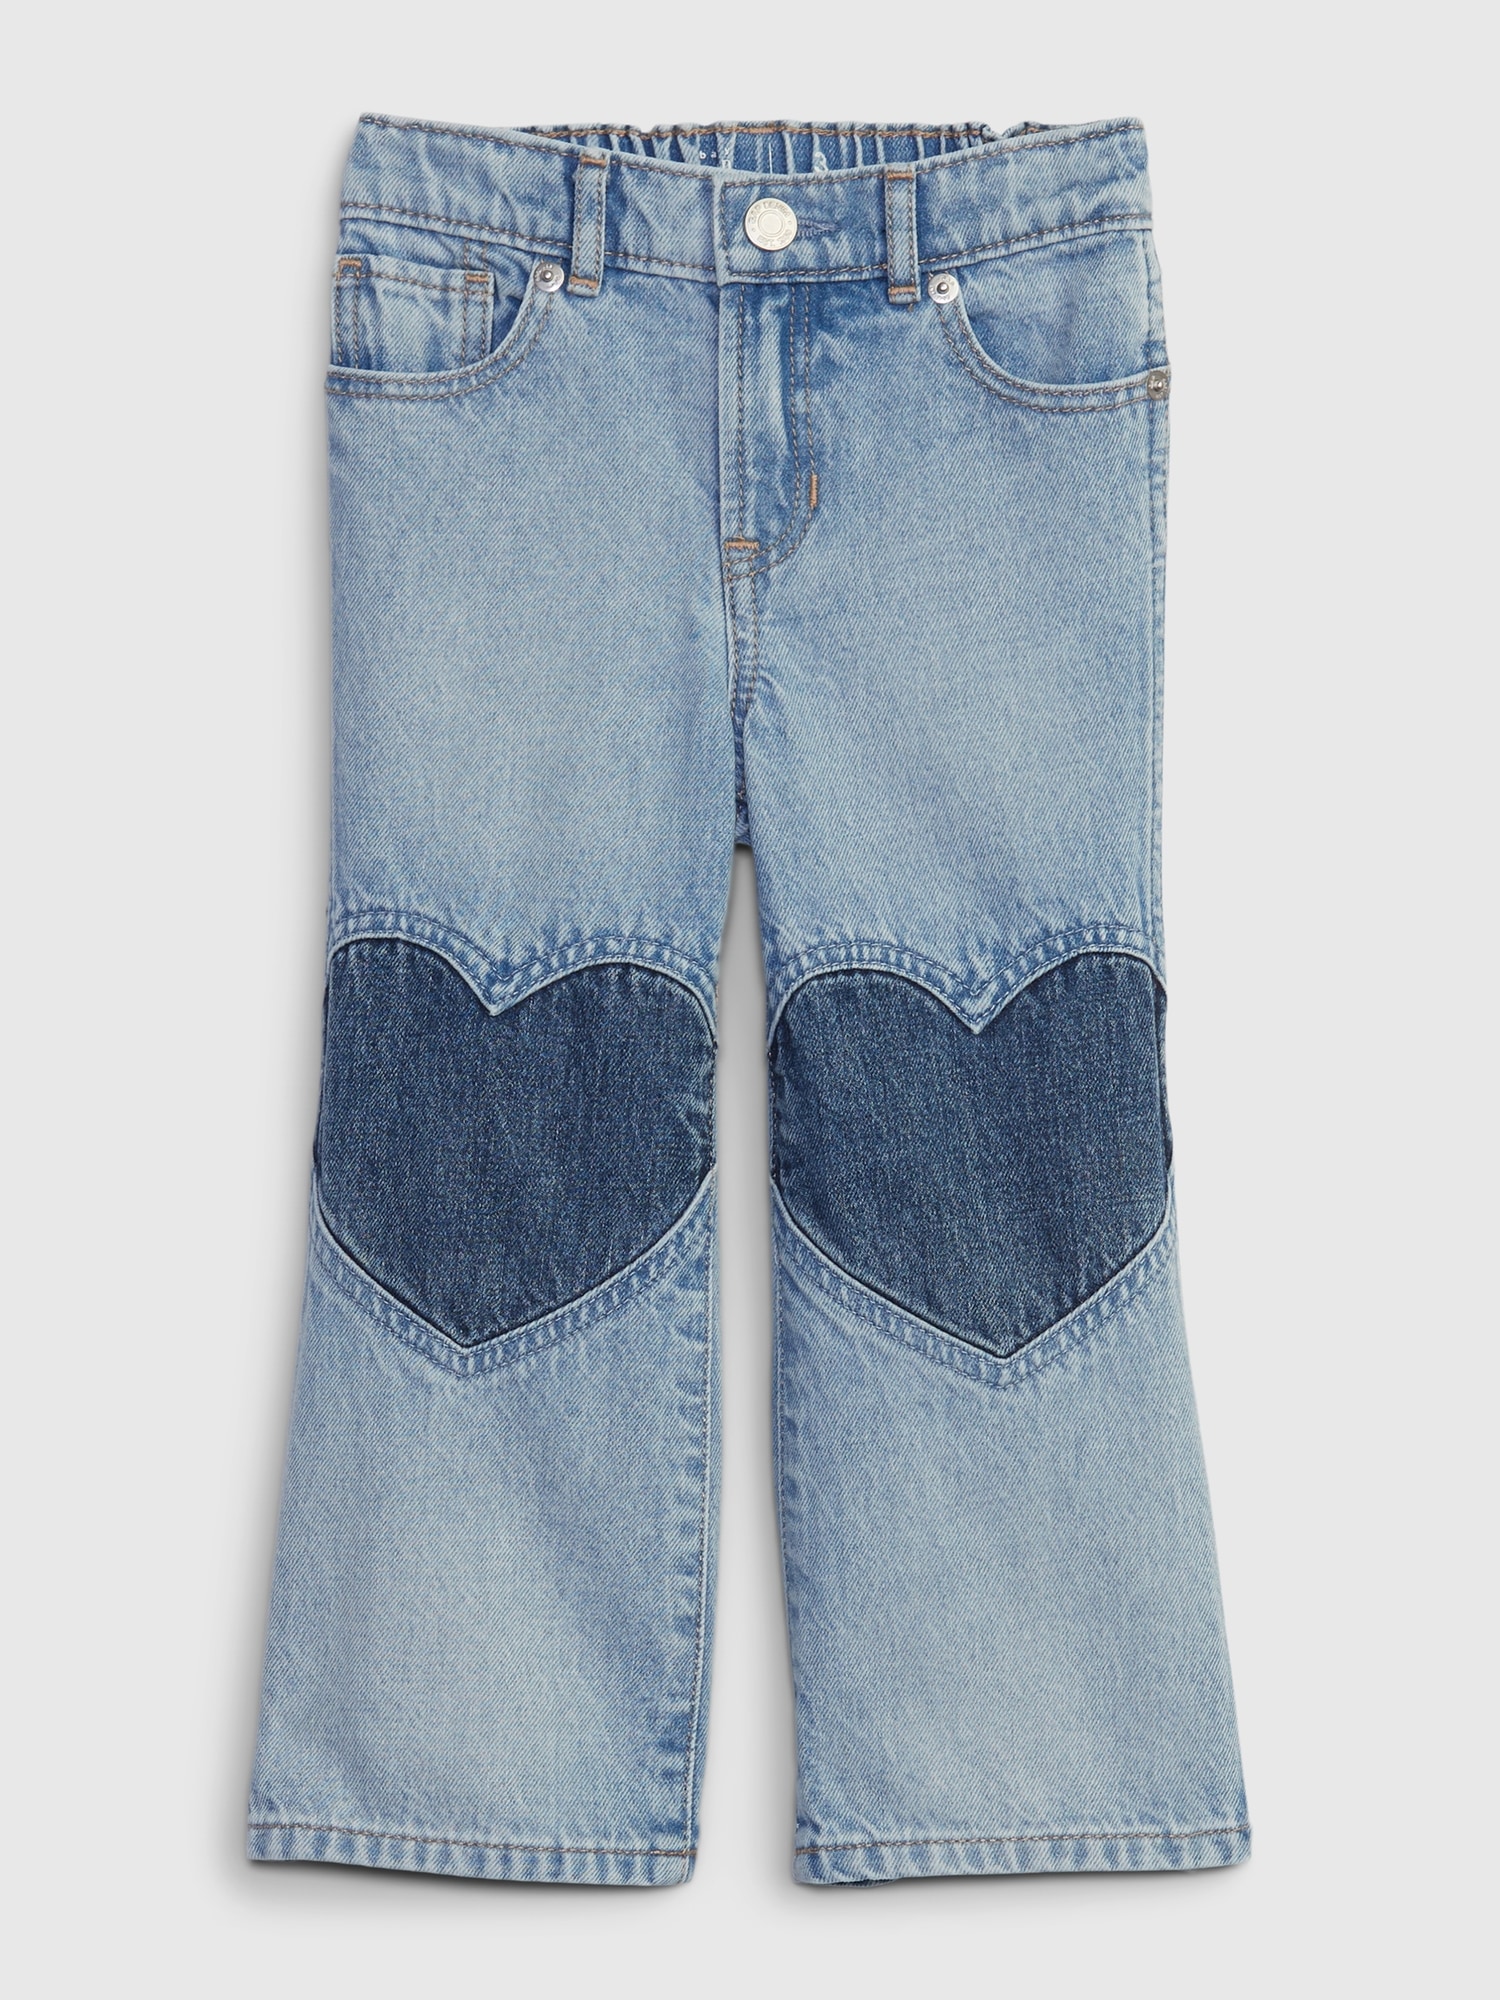 Baby Gap Girls Straight Leg Jeans Size 12-18 Months Snap Crotch 100% Cotton  Blue